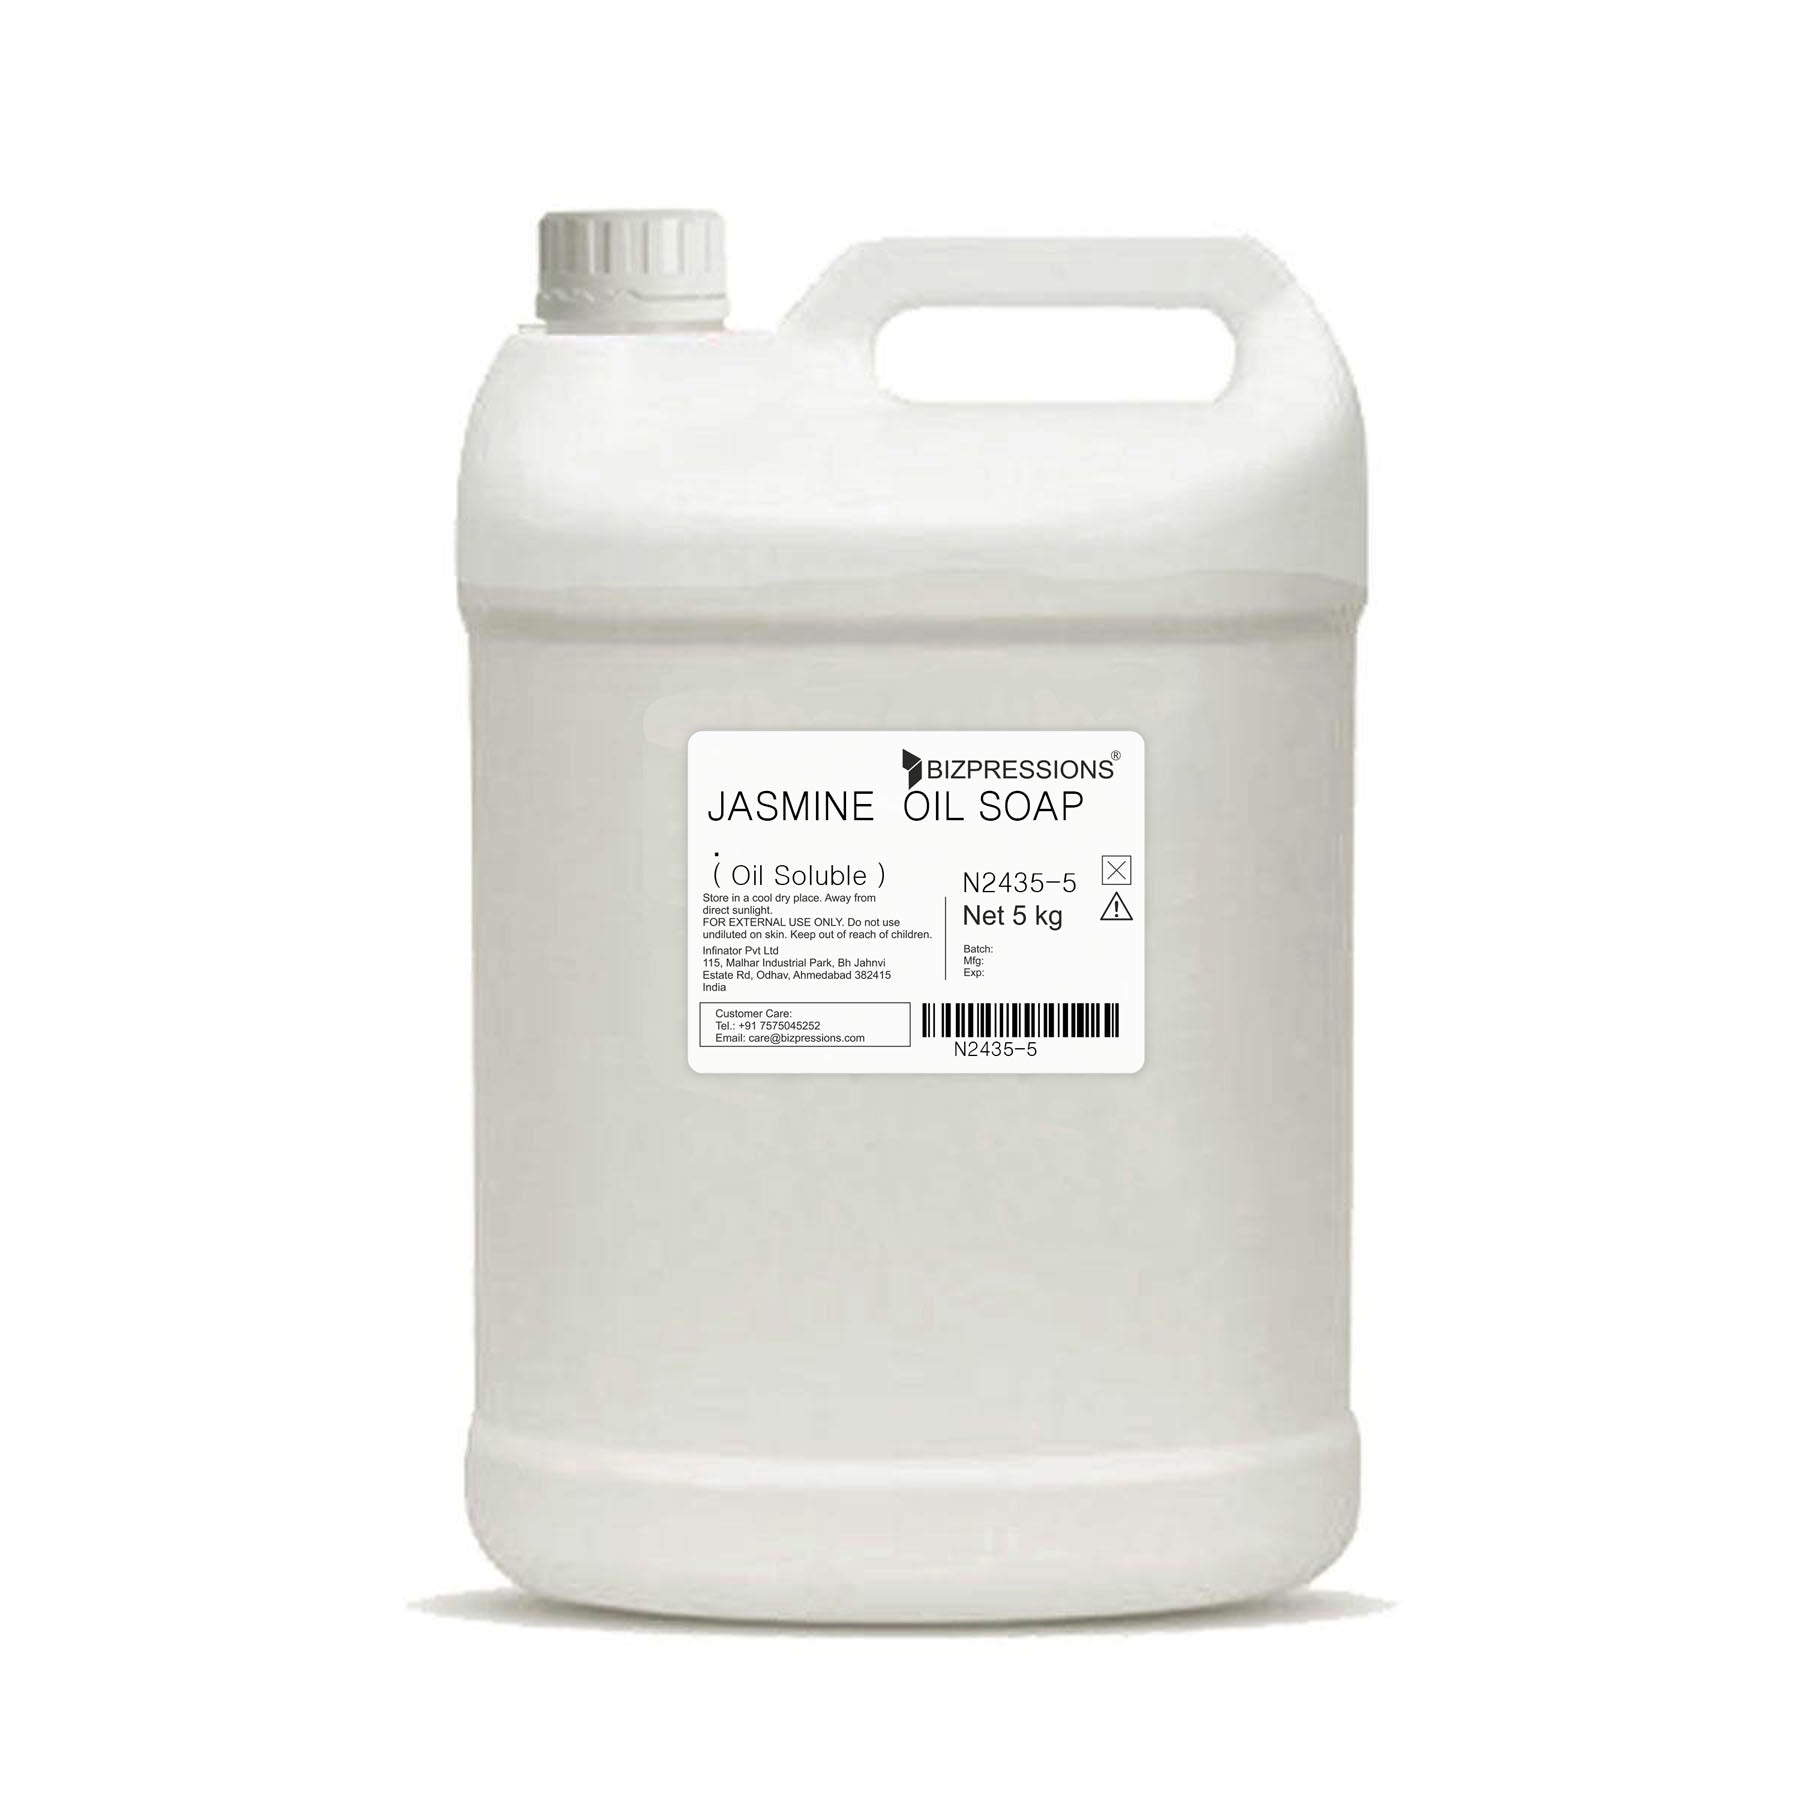 JASMINE OIL SOAP - Fragrance ( Oil Soluble ) - 5 kg